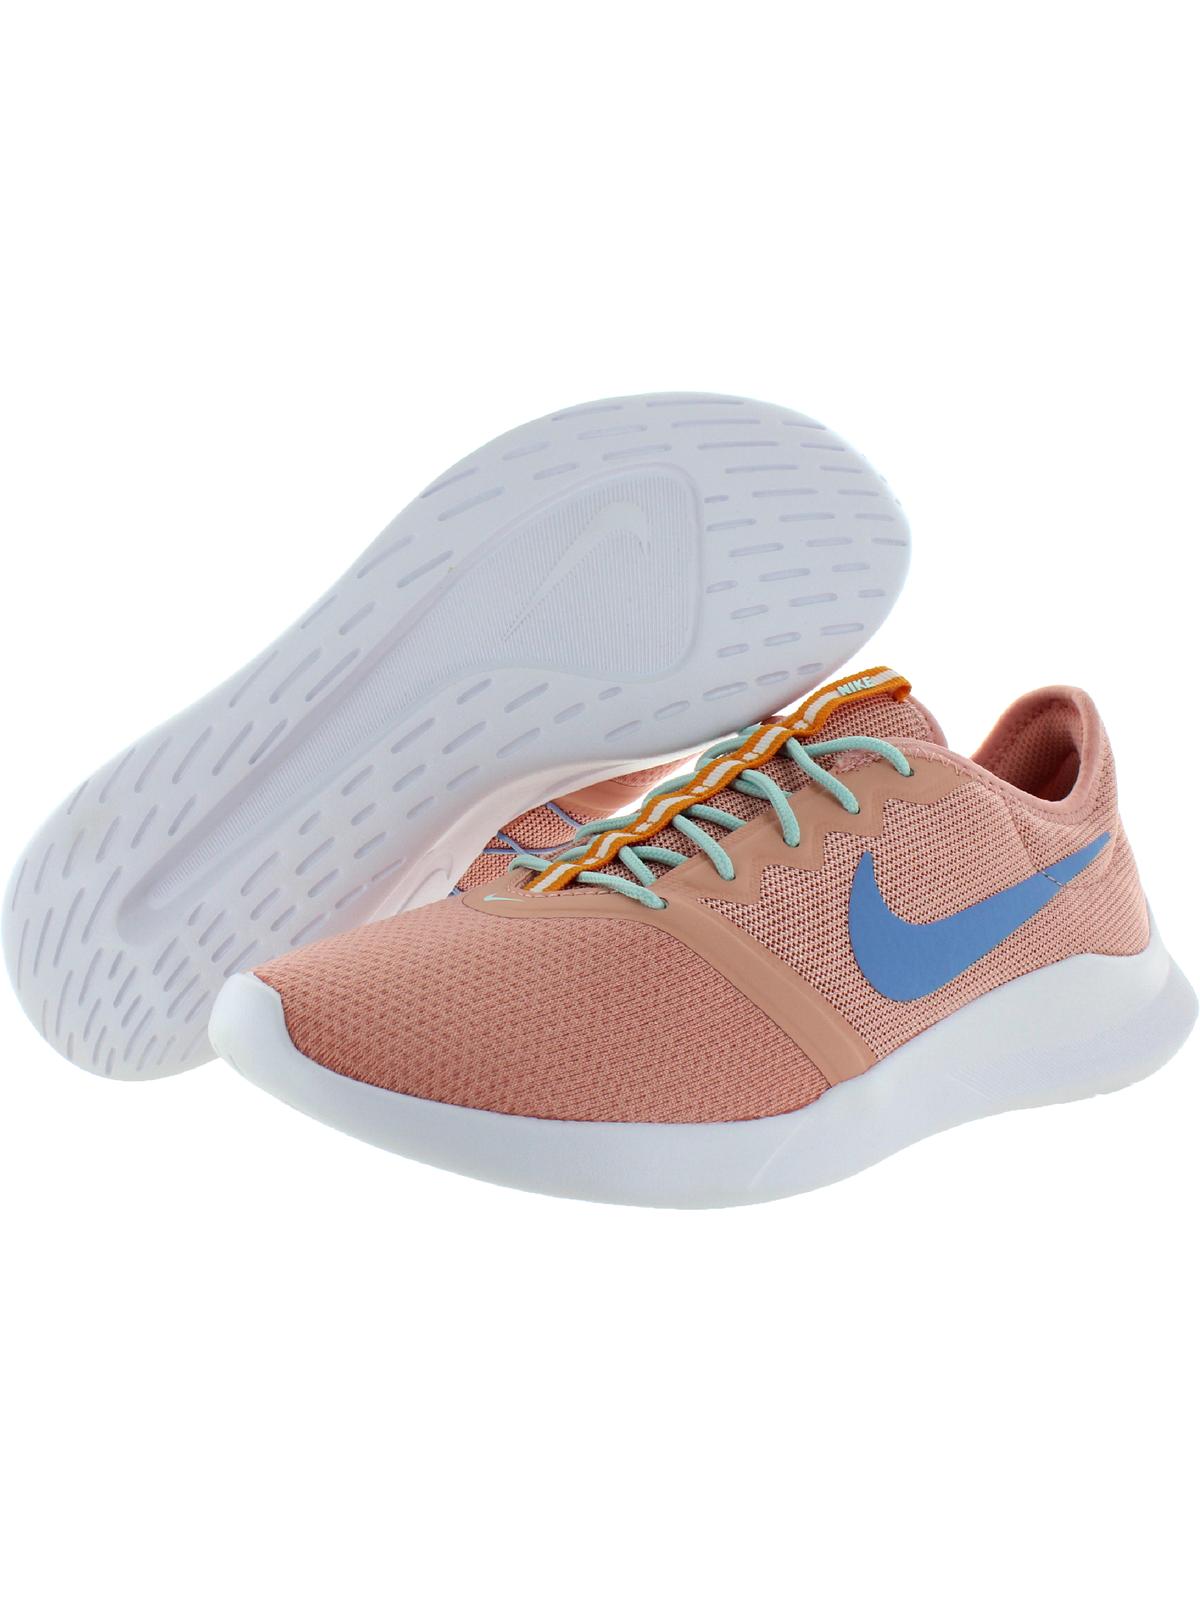 Nike Womens VTR Comfort Mesh Running Shoes - image 2 of 2